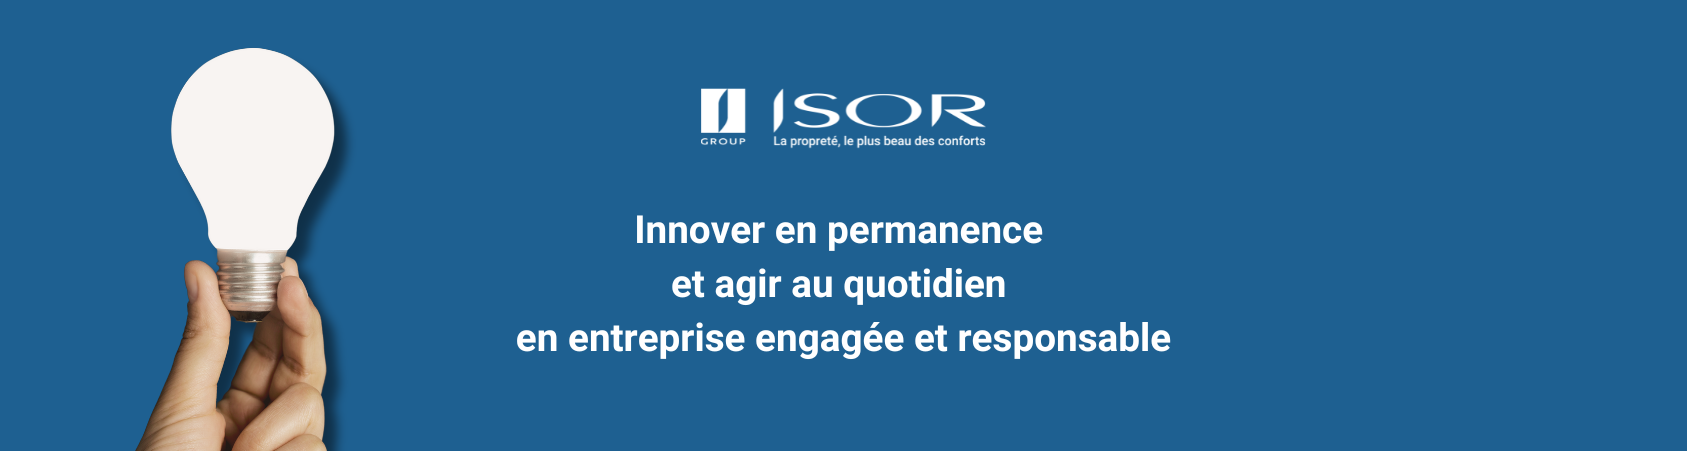 Innovation ISOR